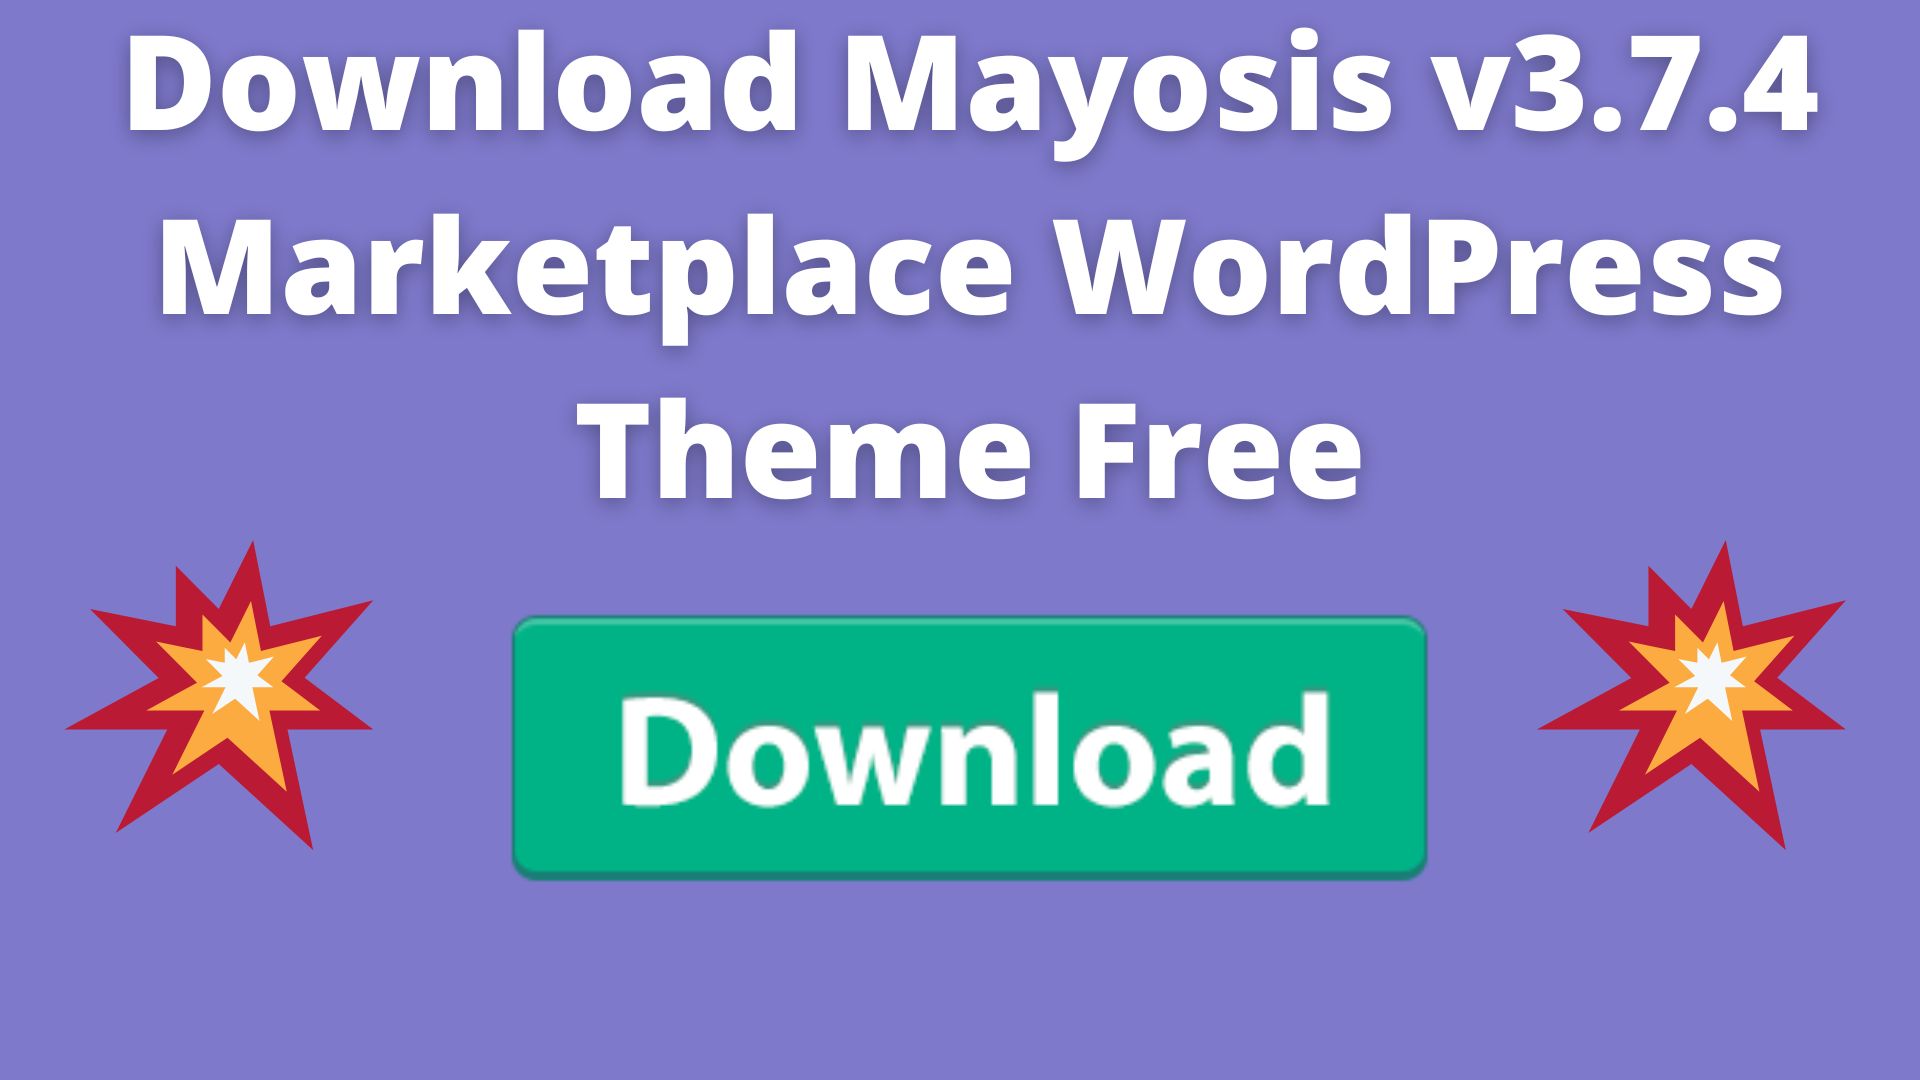 Download mayosis v3. 7. 4 marketplace wordpress theme free